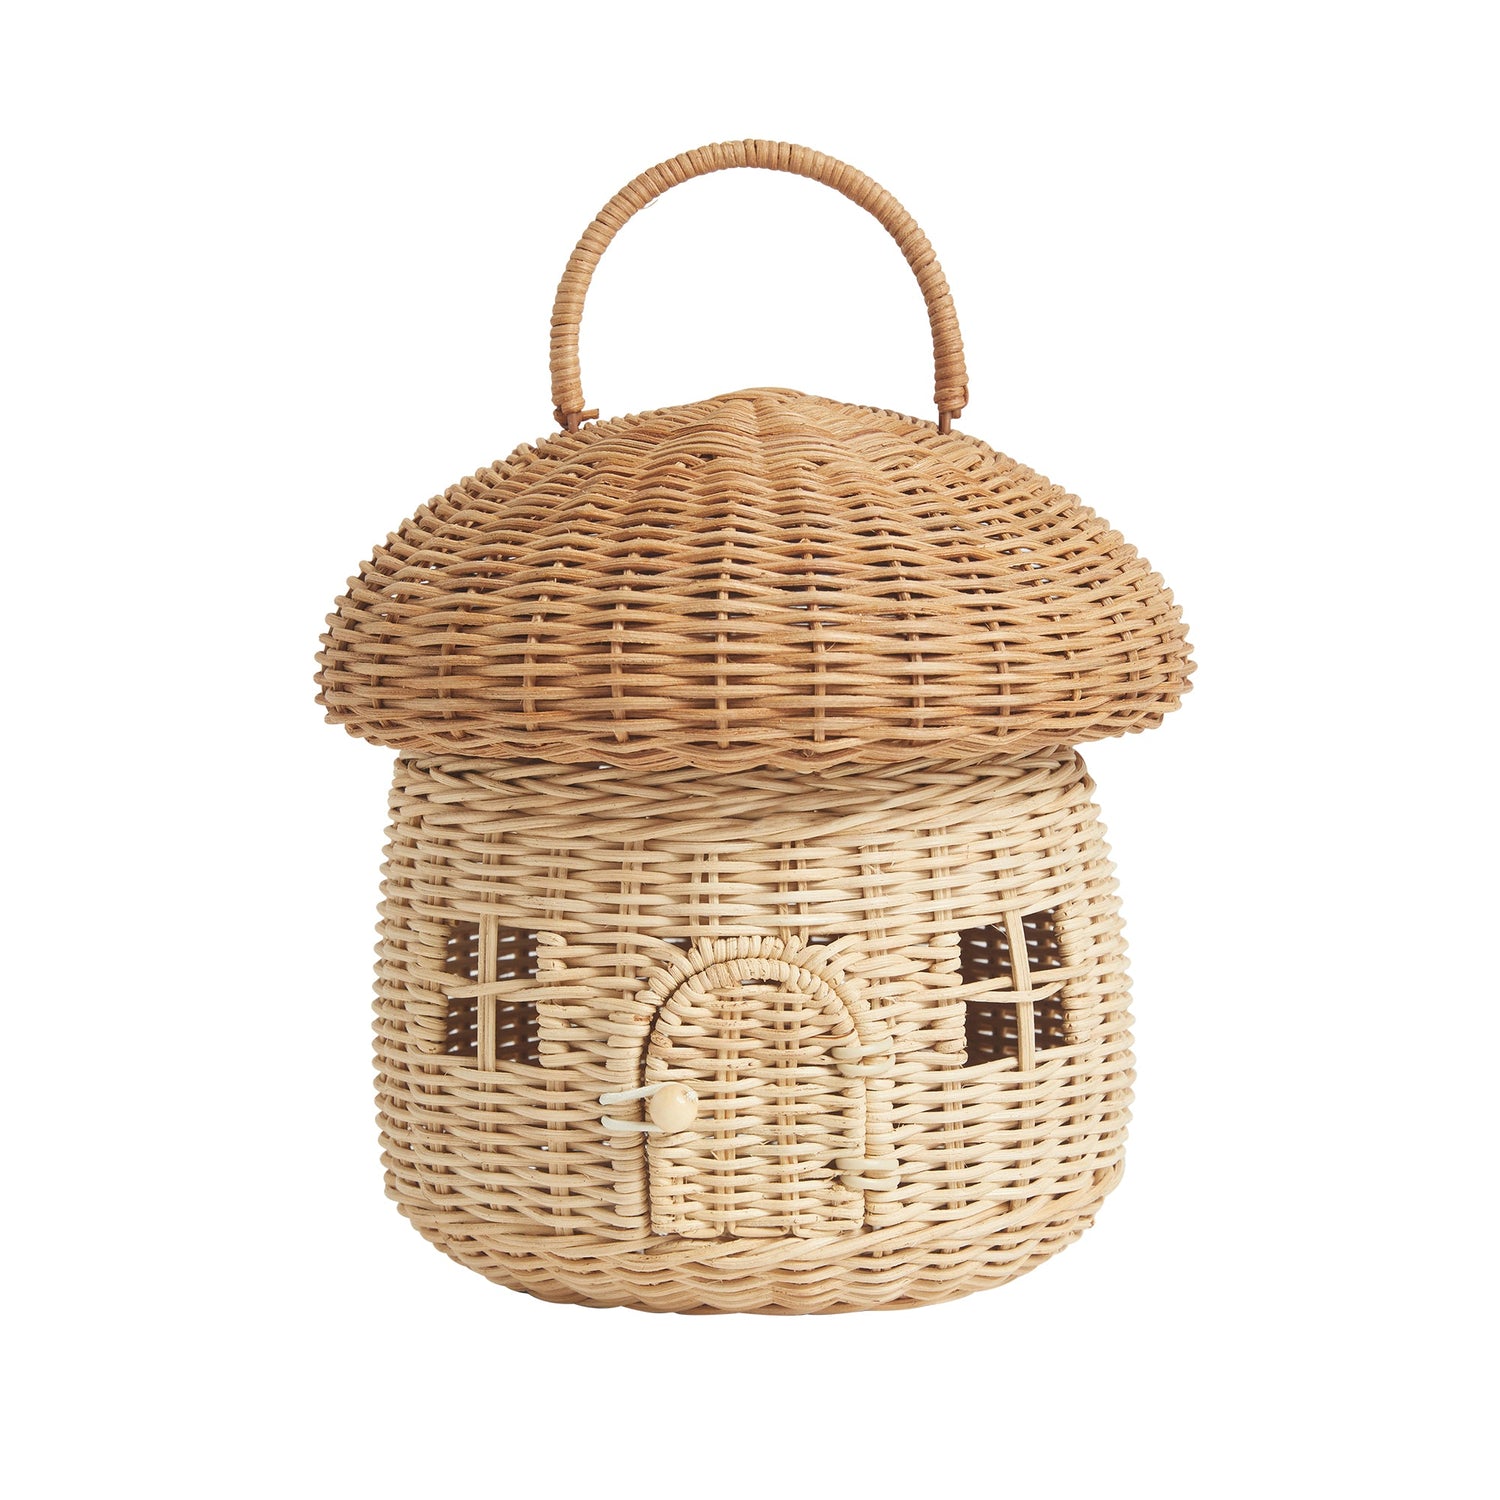 Olli Ella Rattan Rattan Mushroom Basket (Natural) by Olli Ella Natural Rattan Mushroom Basket | Whimsical Rattan Nursery Decor